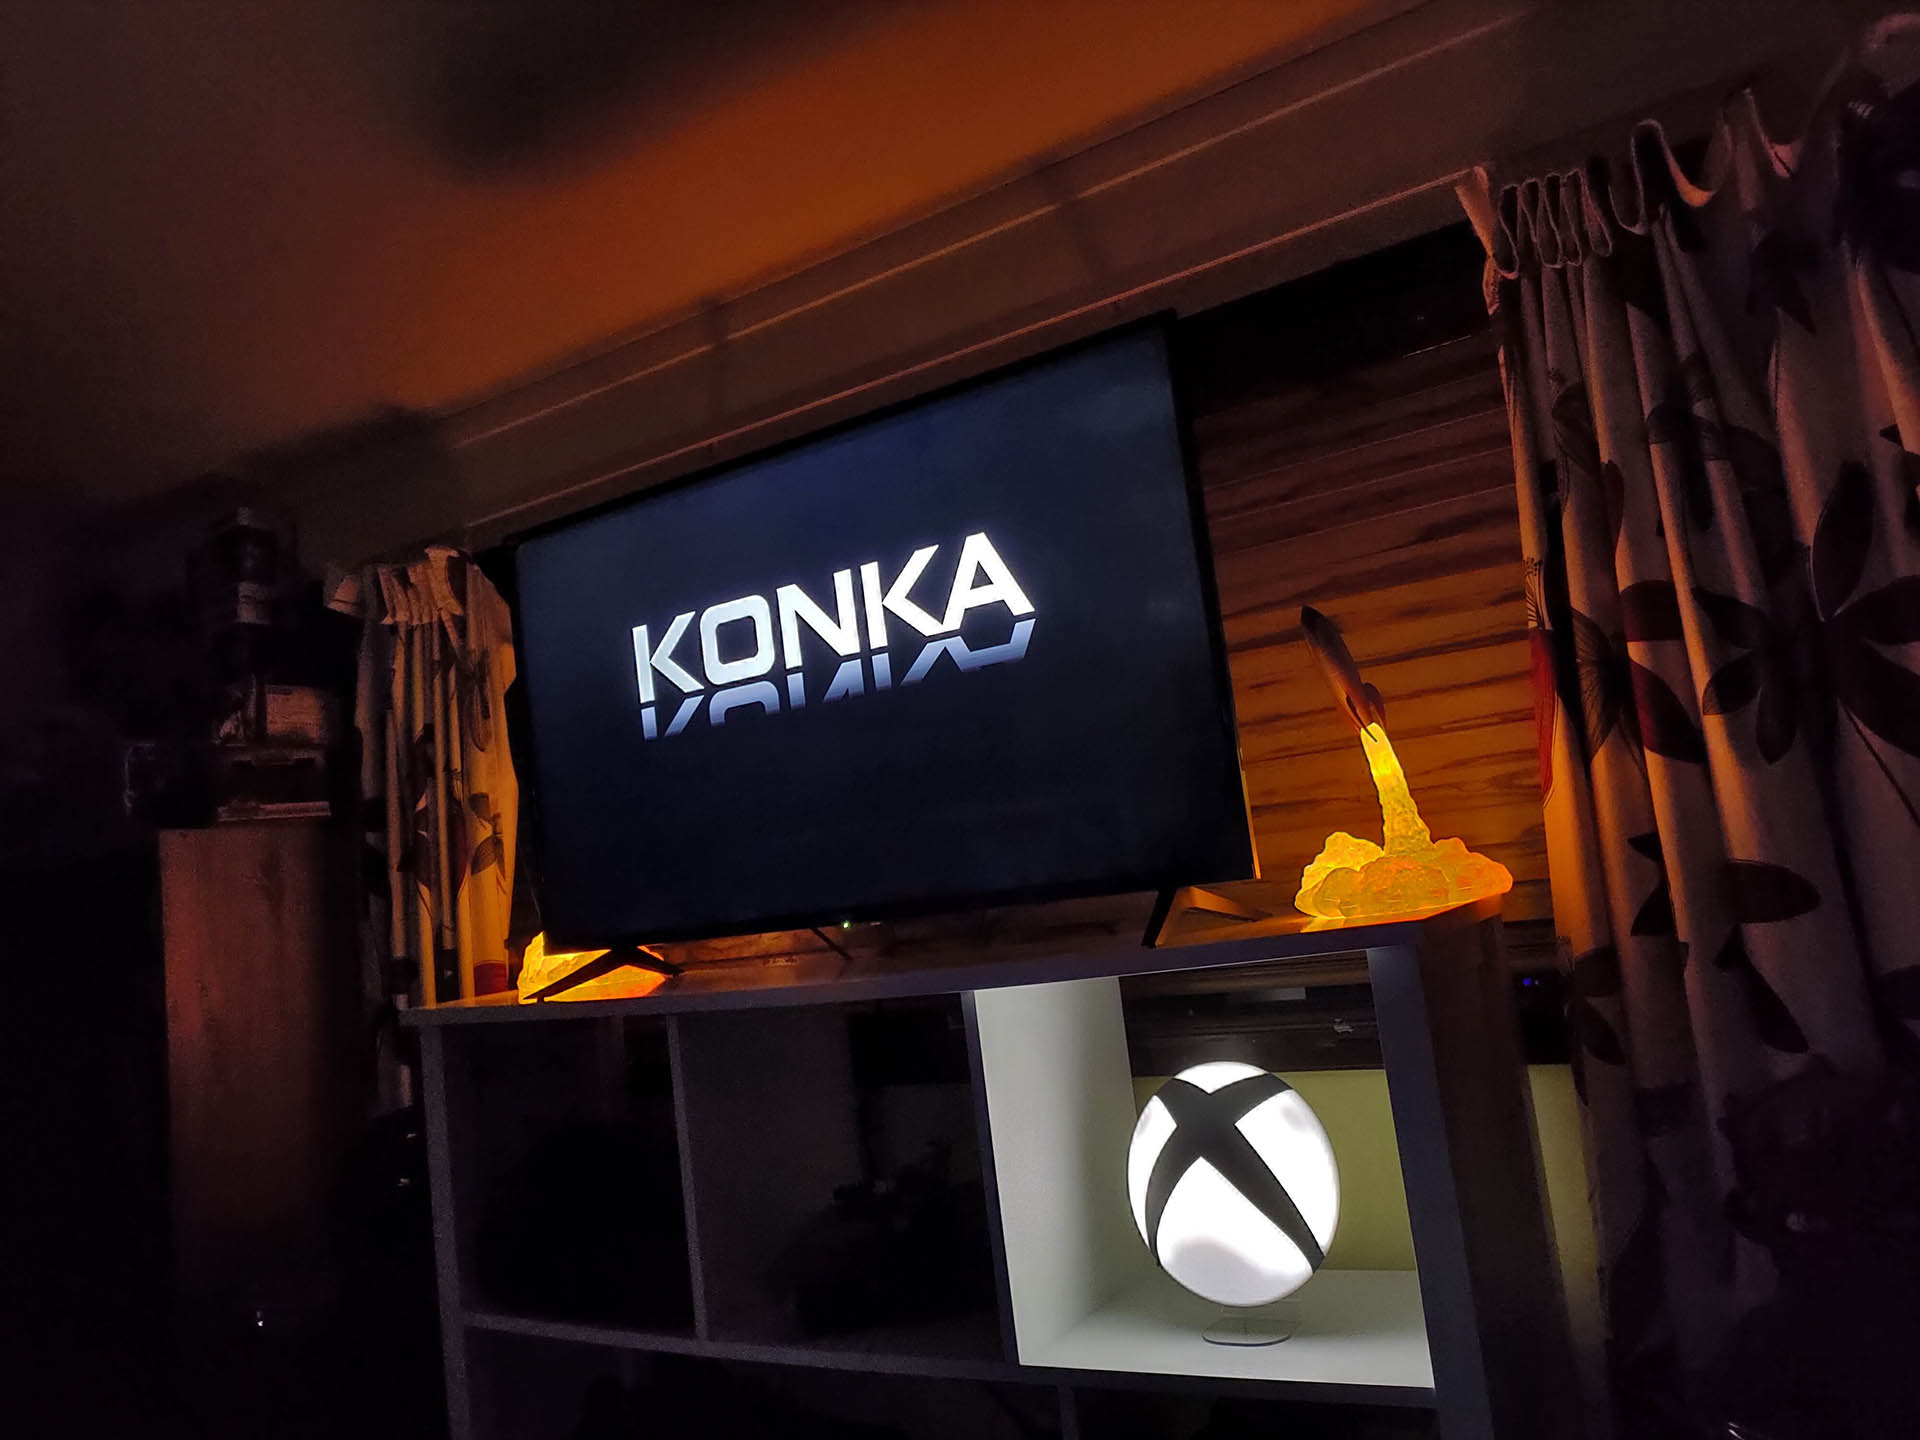 Konka Smart LED TV Review